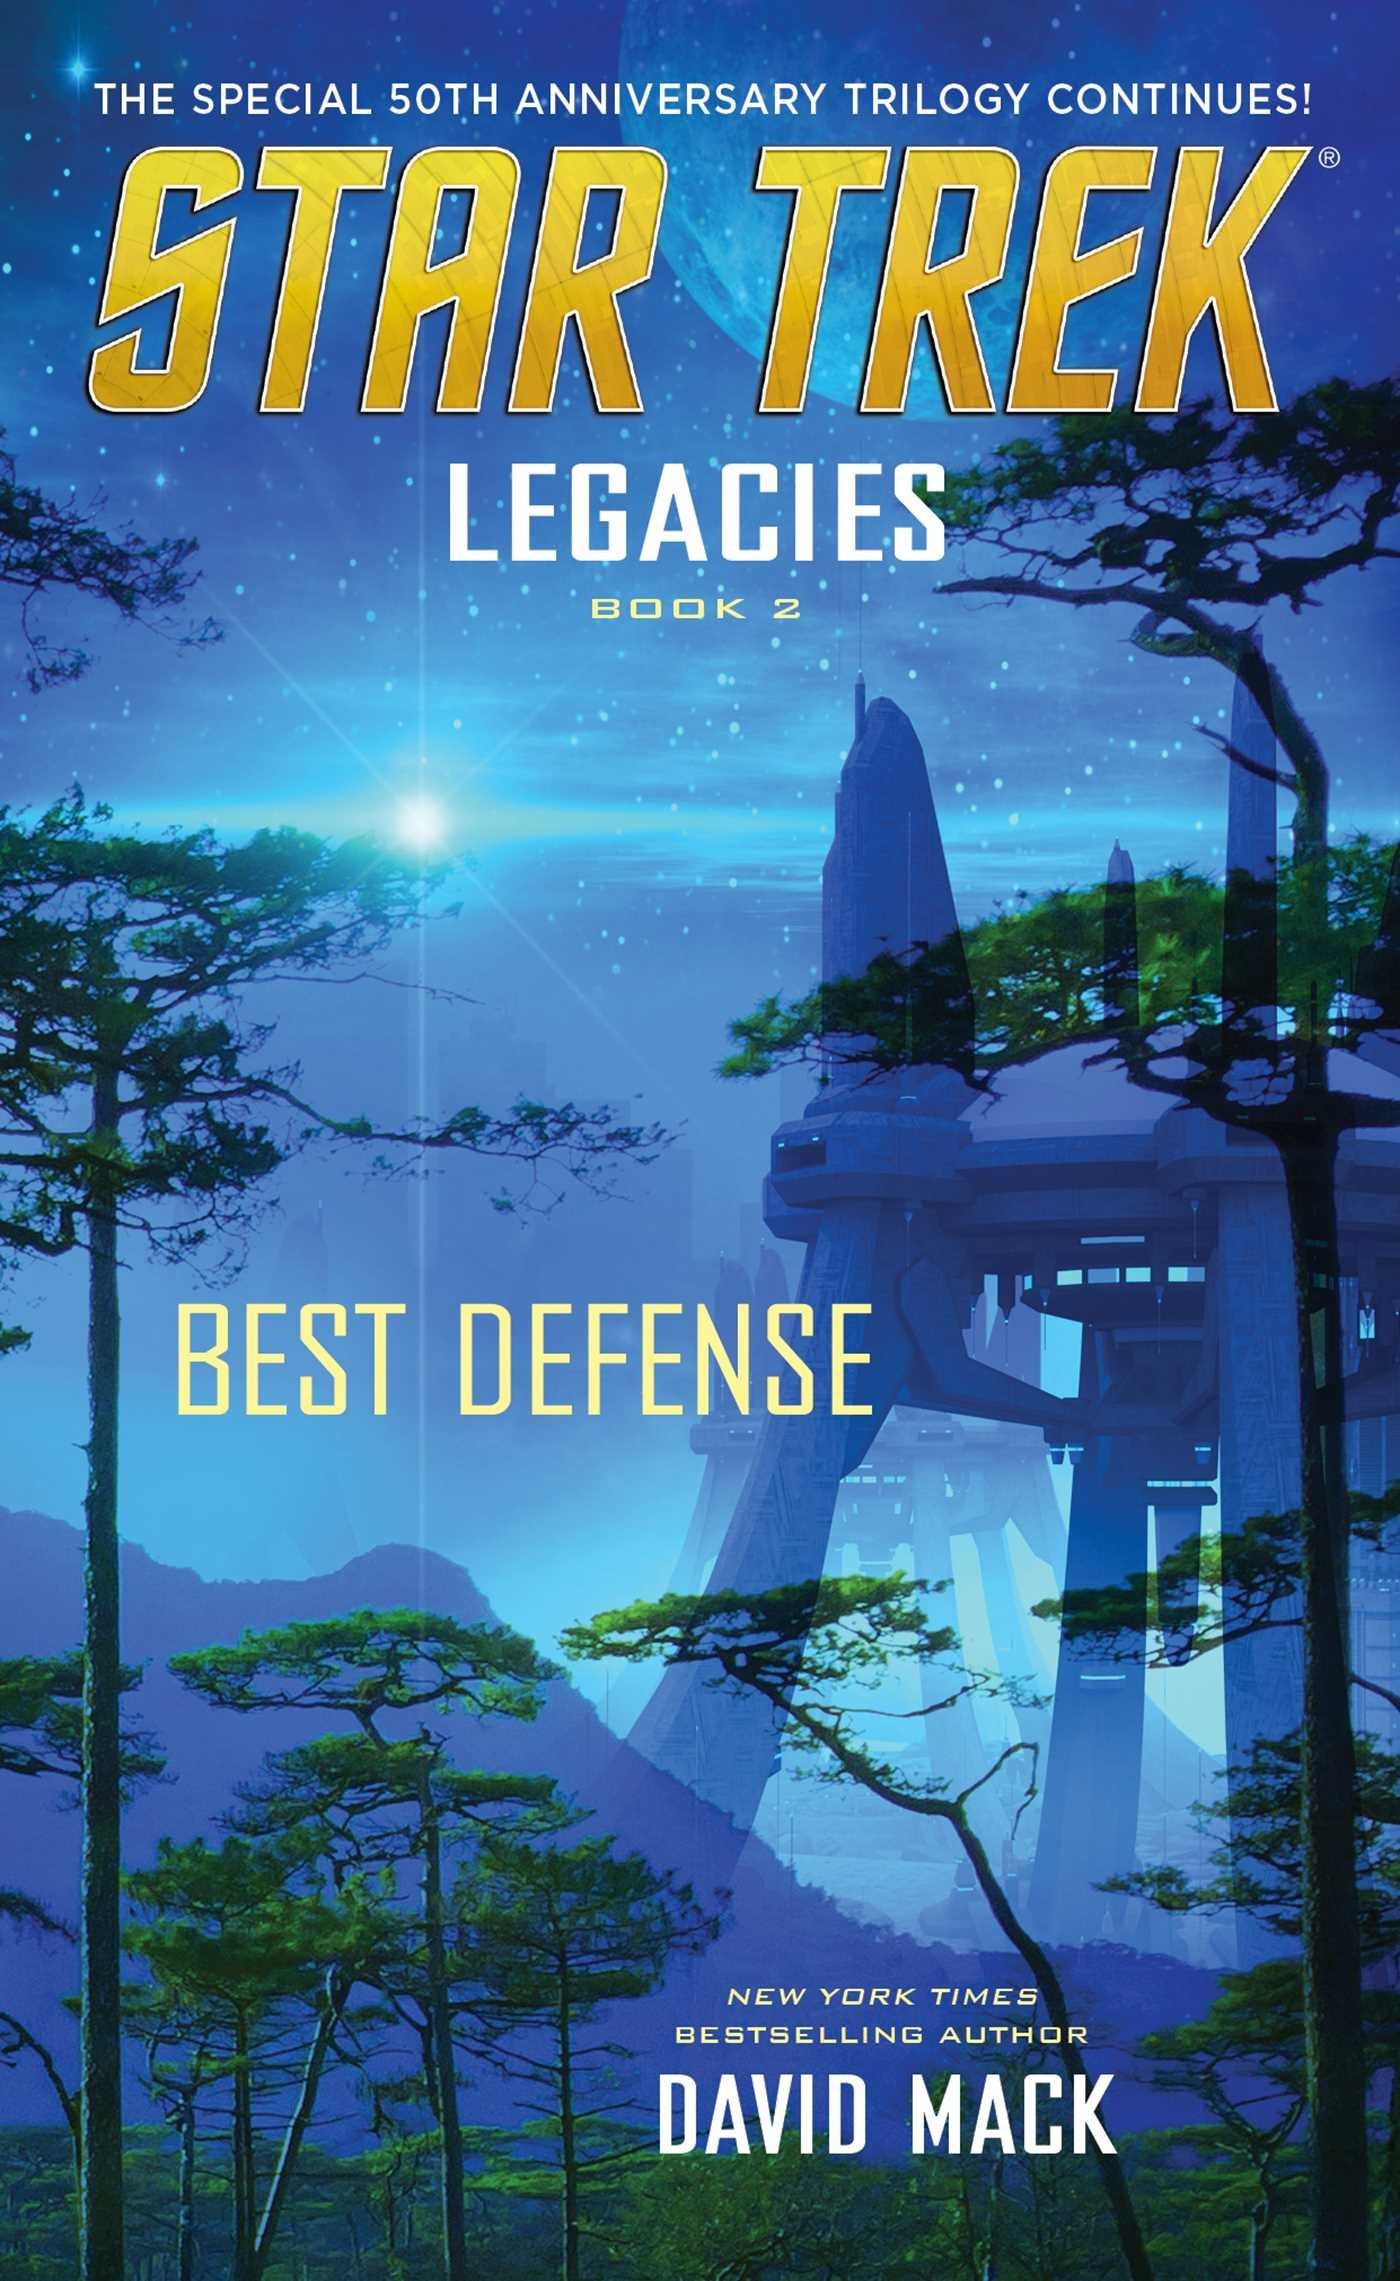 “Star Trek: Legacies: Book 2: Best Defense” Review by Jimsscifi.blogspot.com